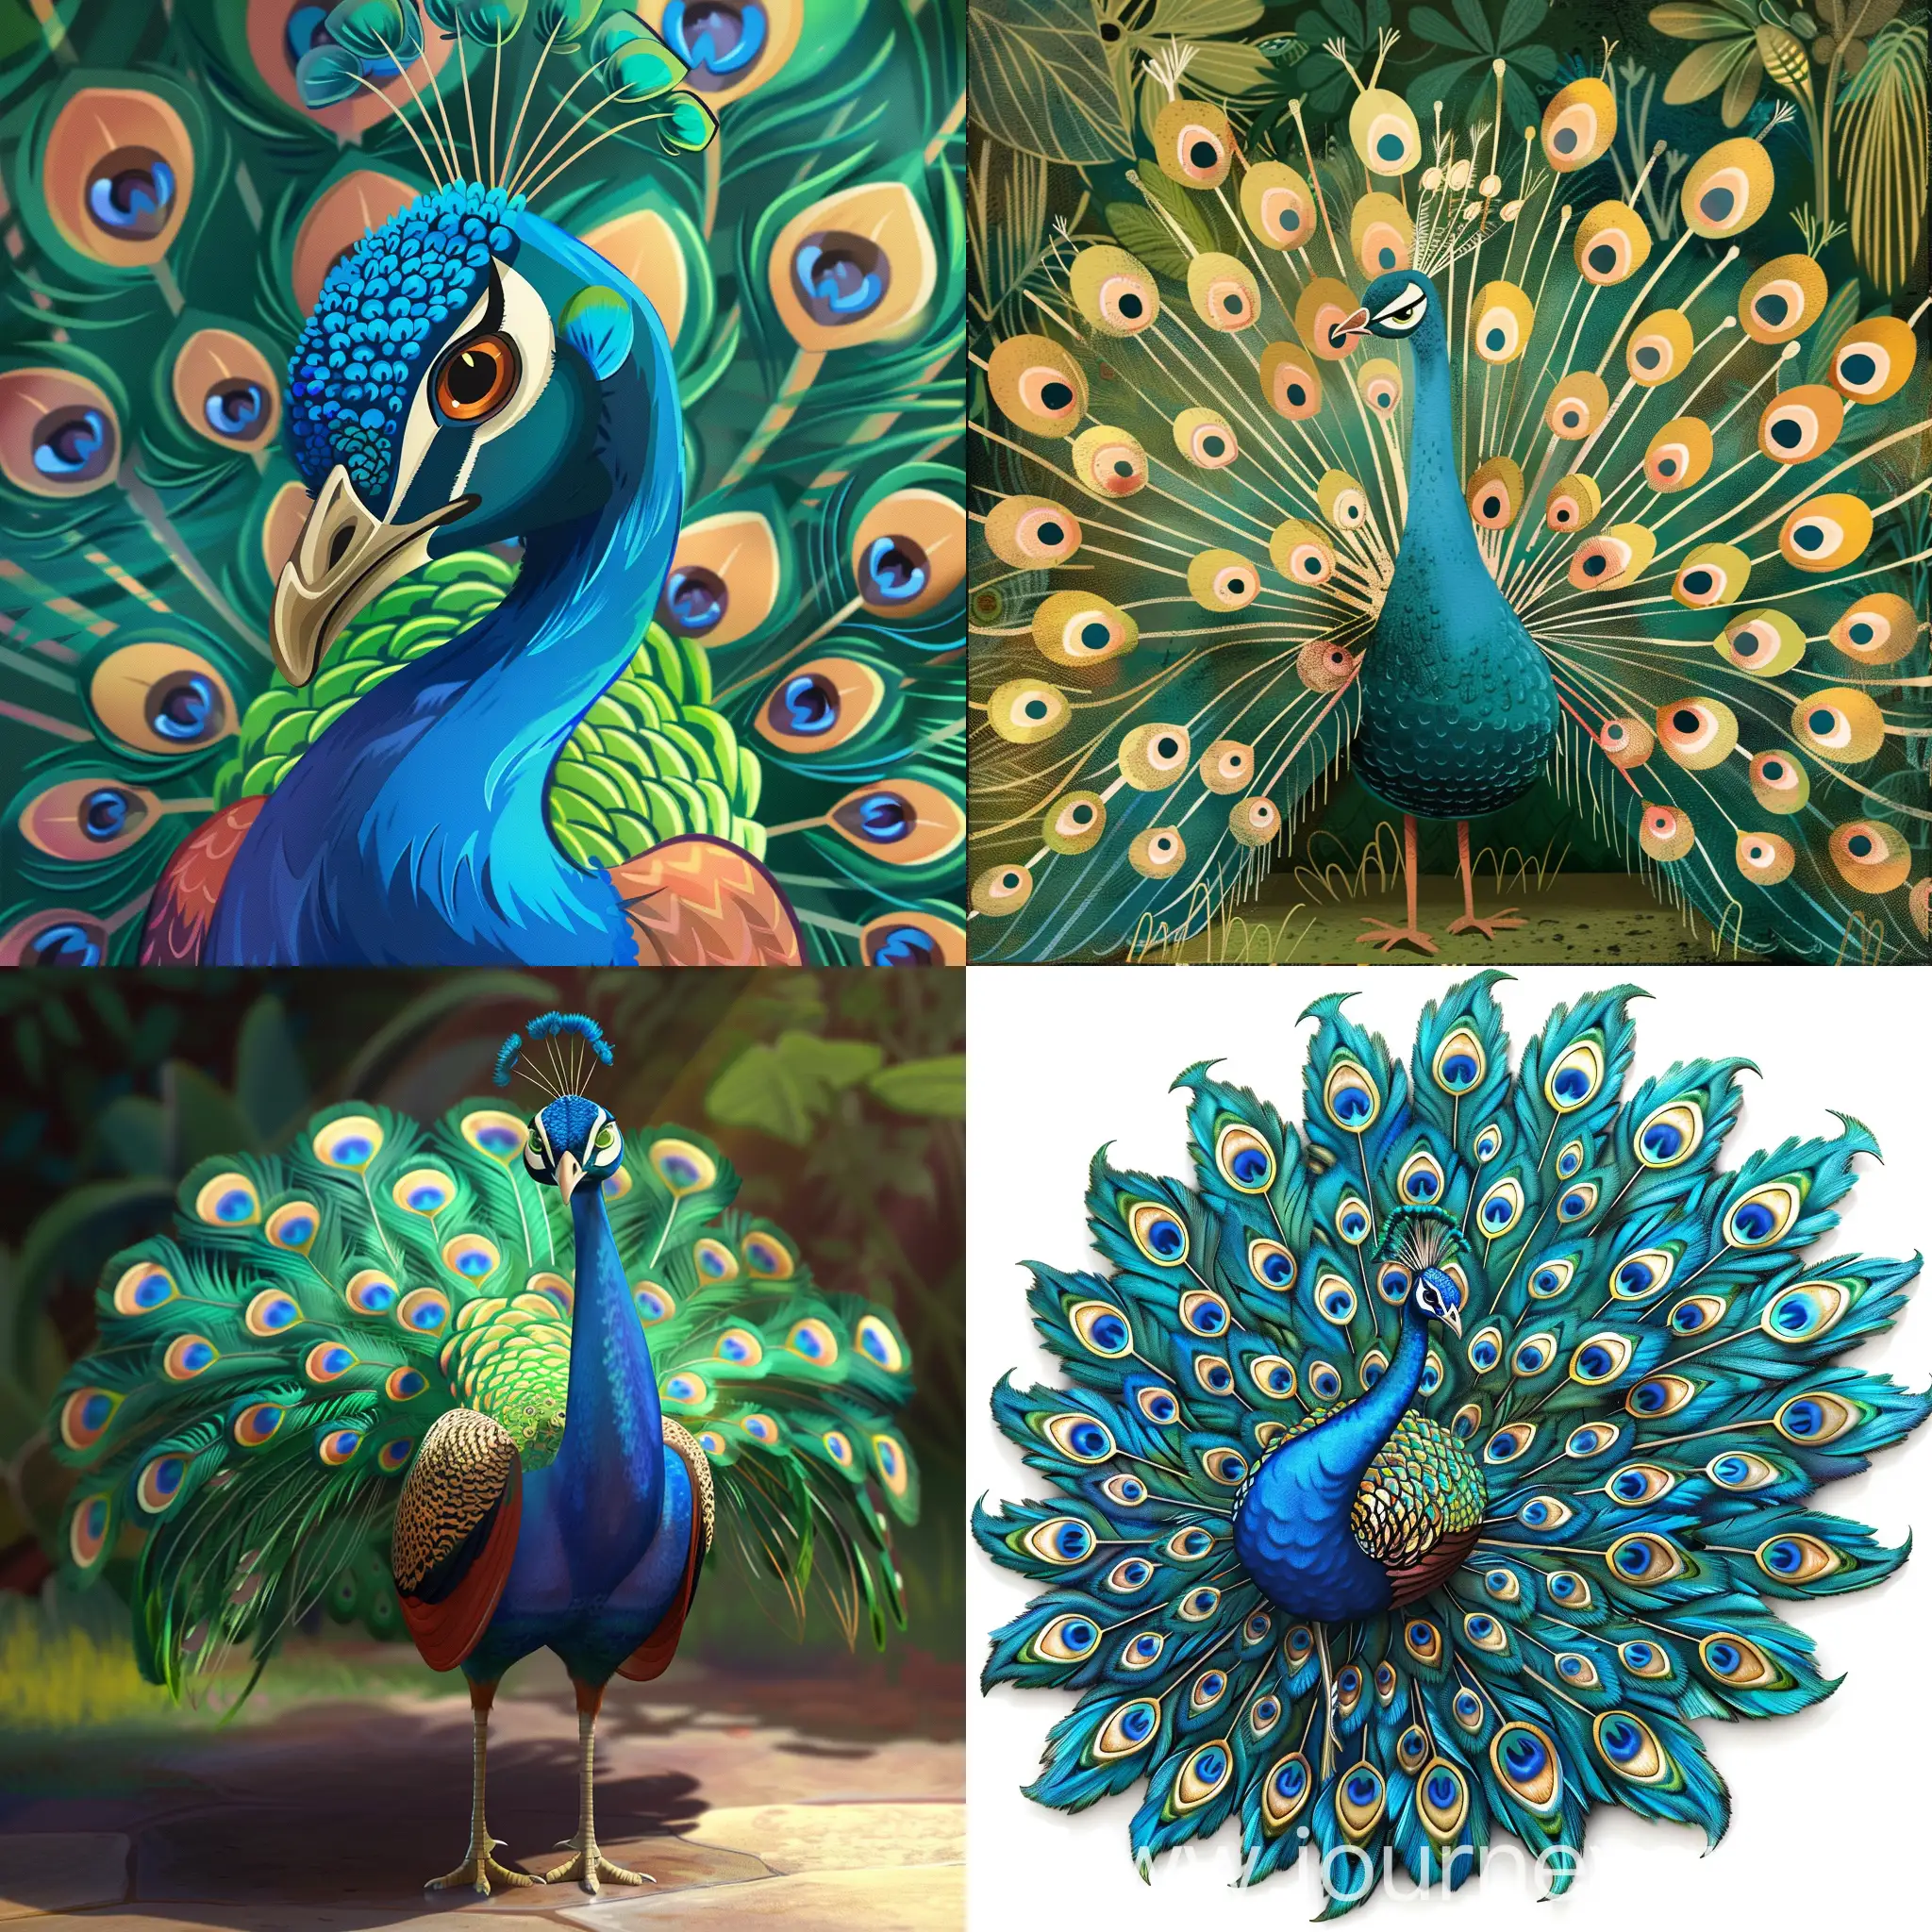 Animated peacock